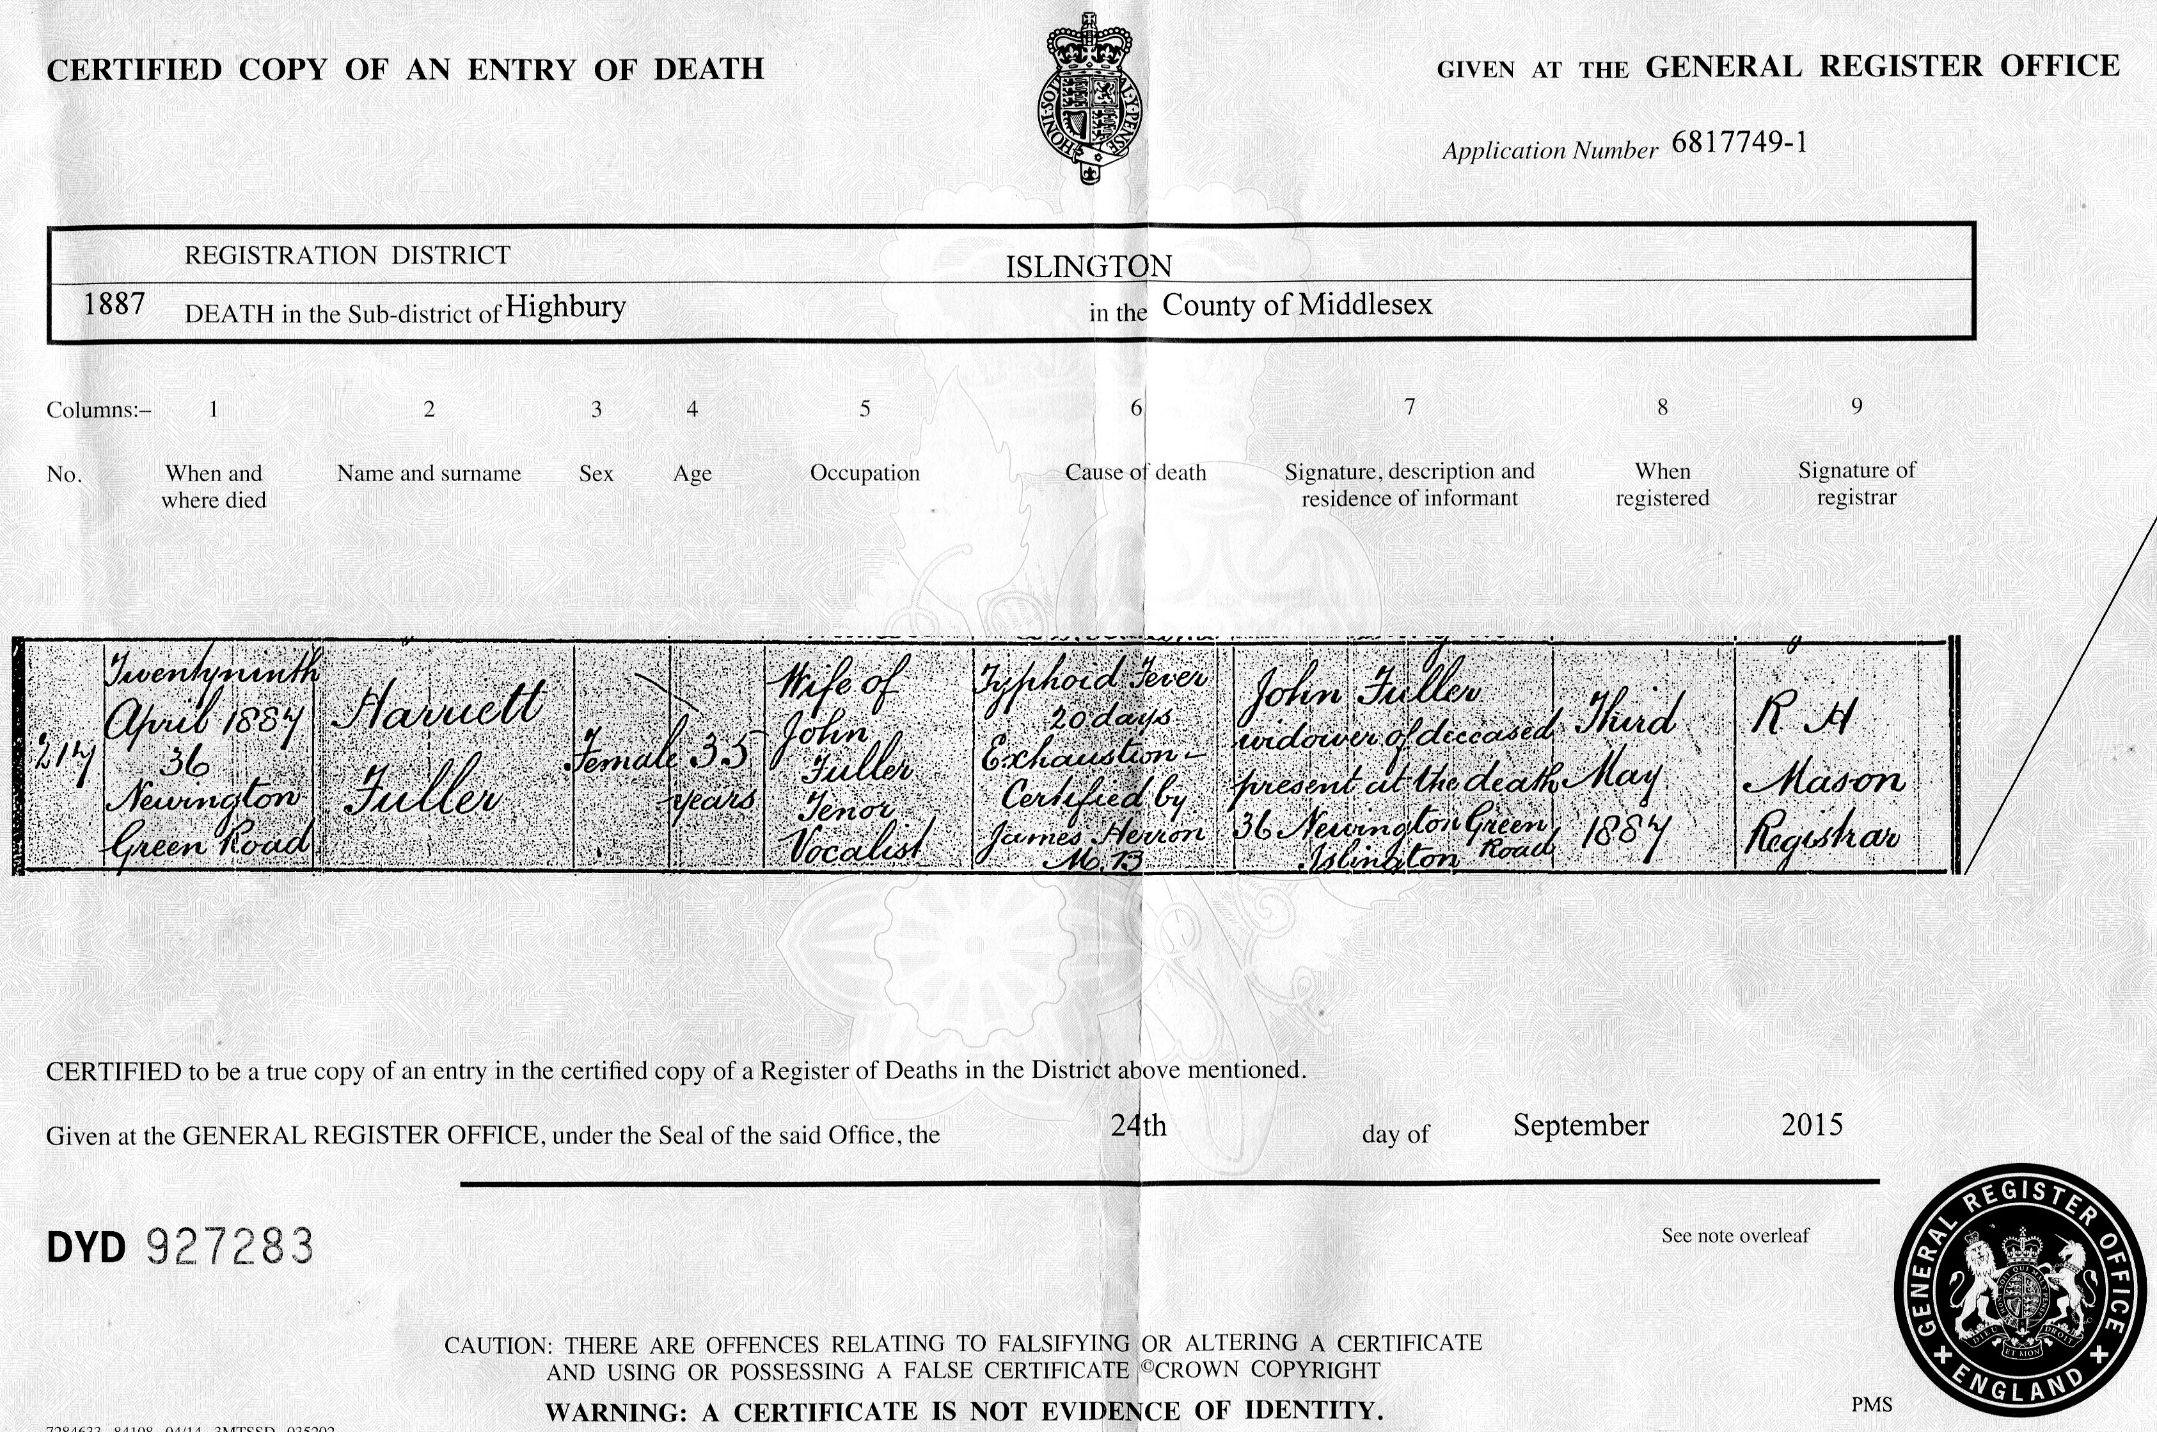 C:\Users\Virginia Rundle\Documents\Death Certificate for Harriett Fuller 29 April 1887 36 Newington Green Road, Islington, London..jpg